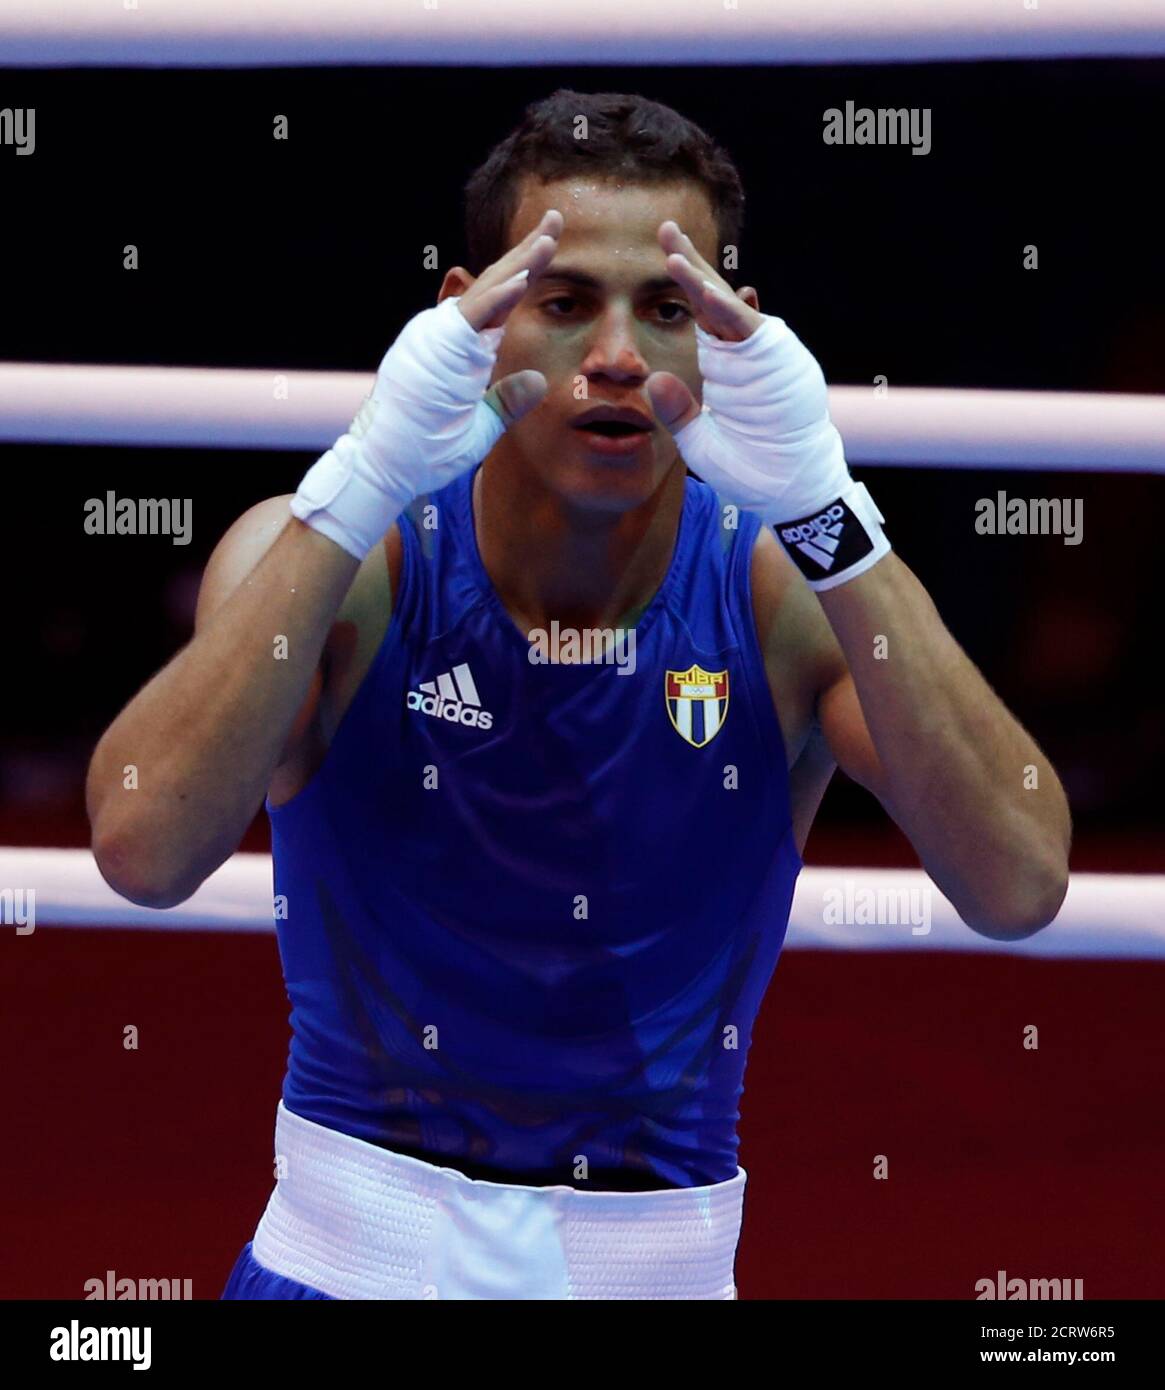 jose ramirez boxer 2012 olympics